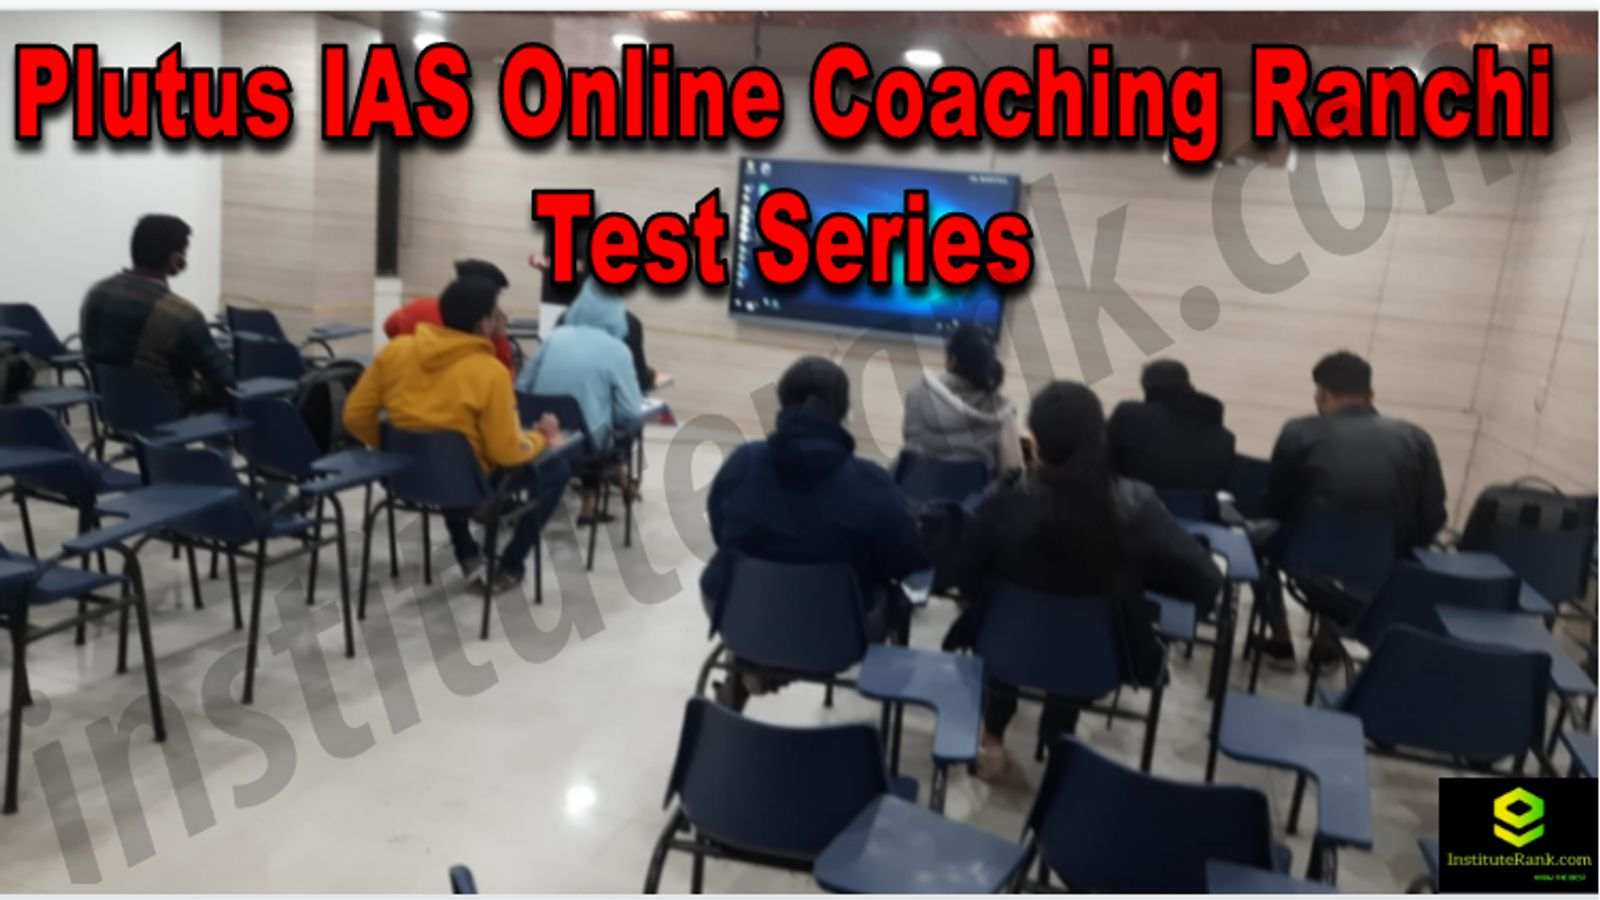 Plutus IAS Online Coaching Ranchi Reviews Test Series